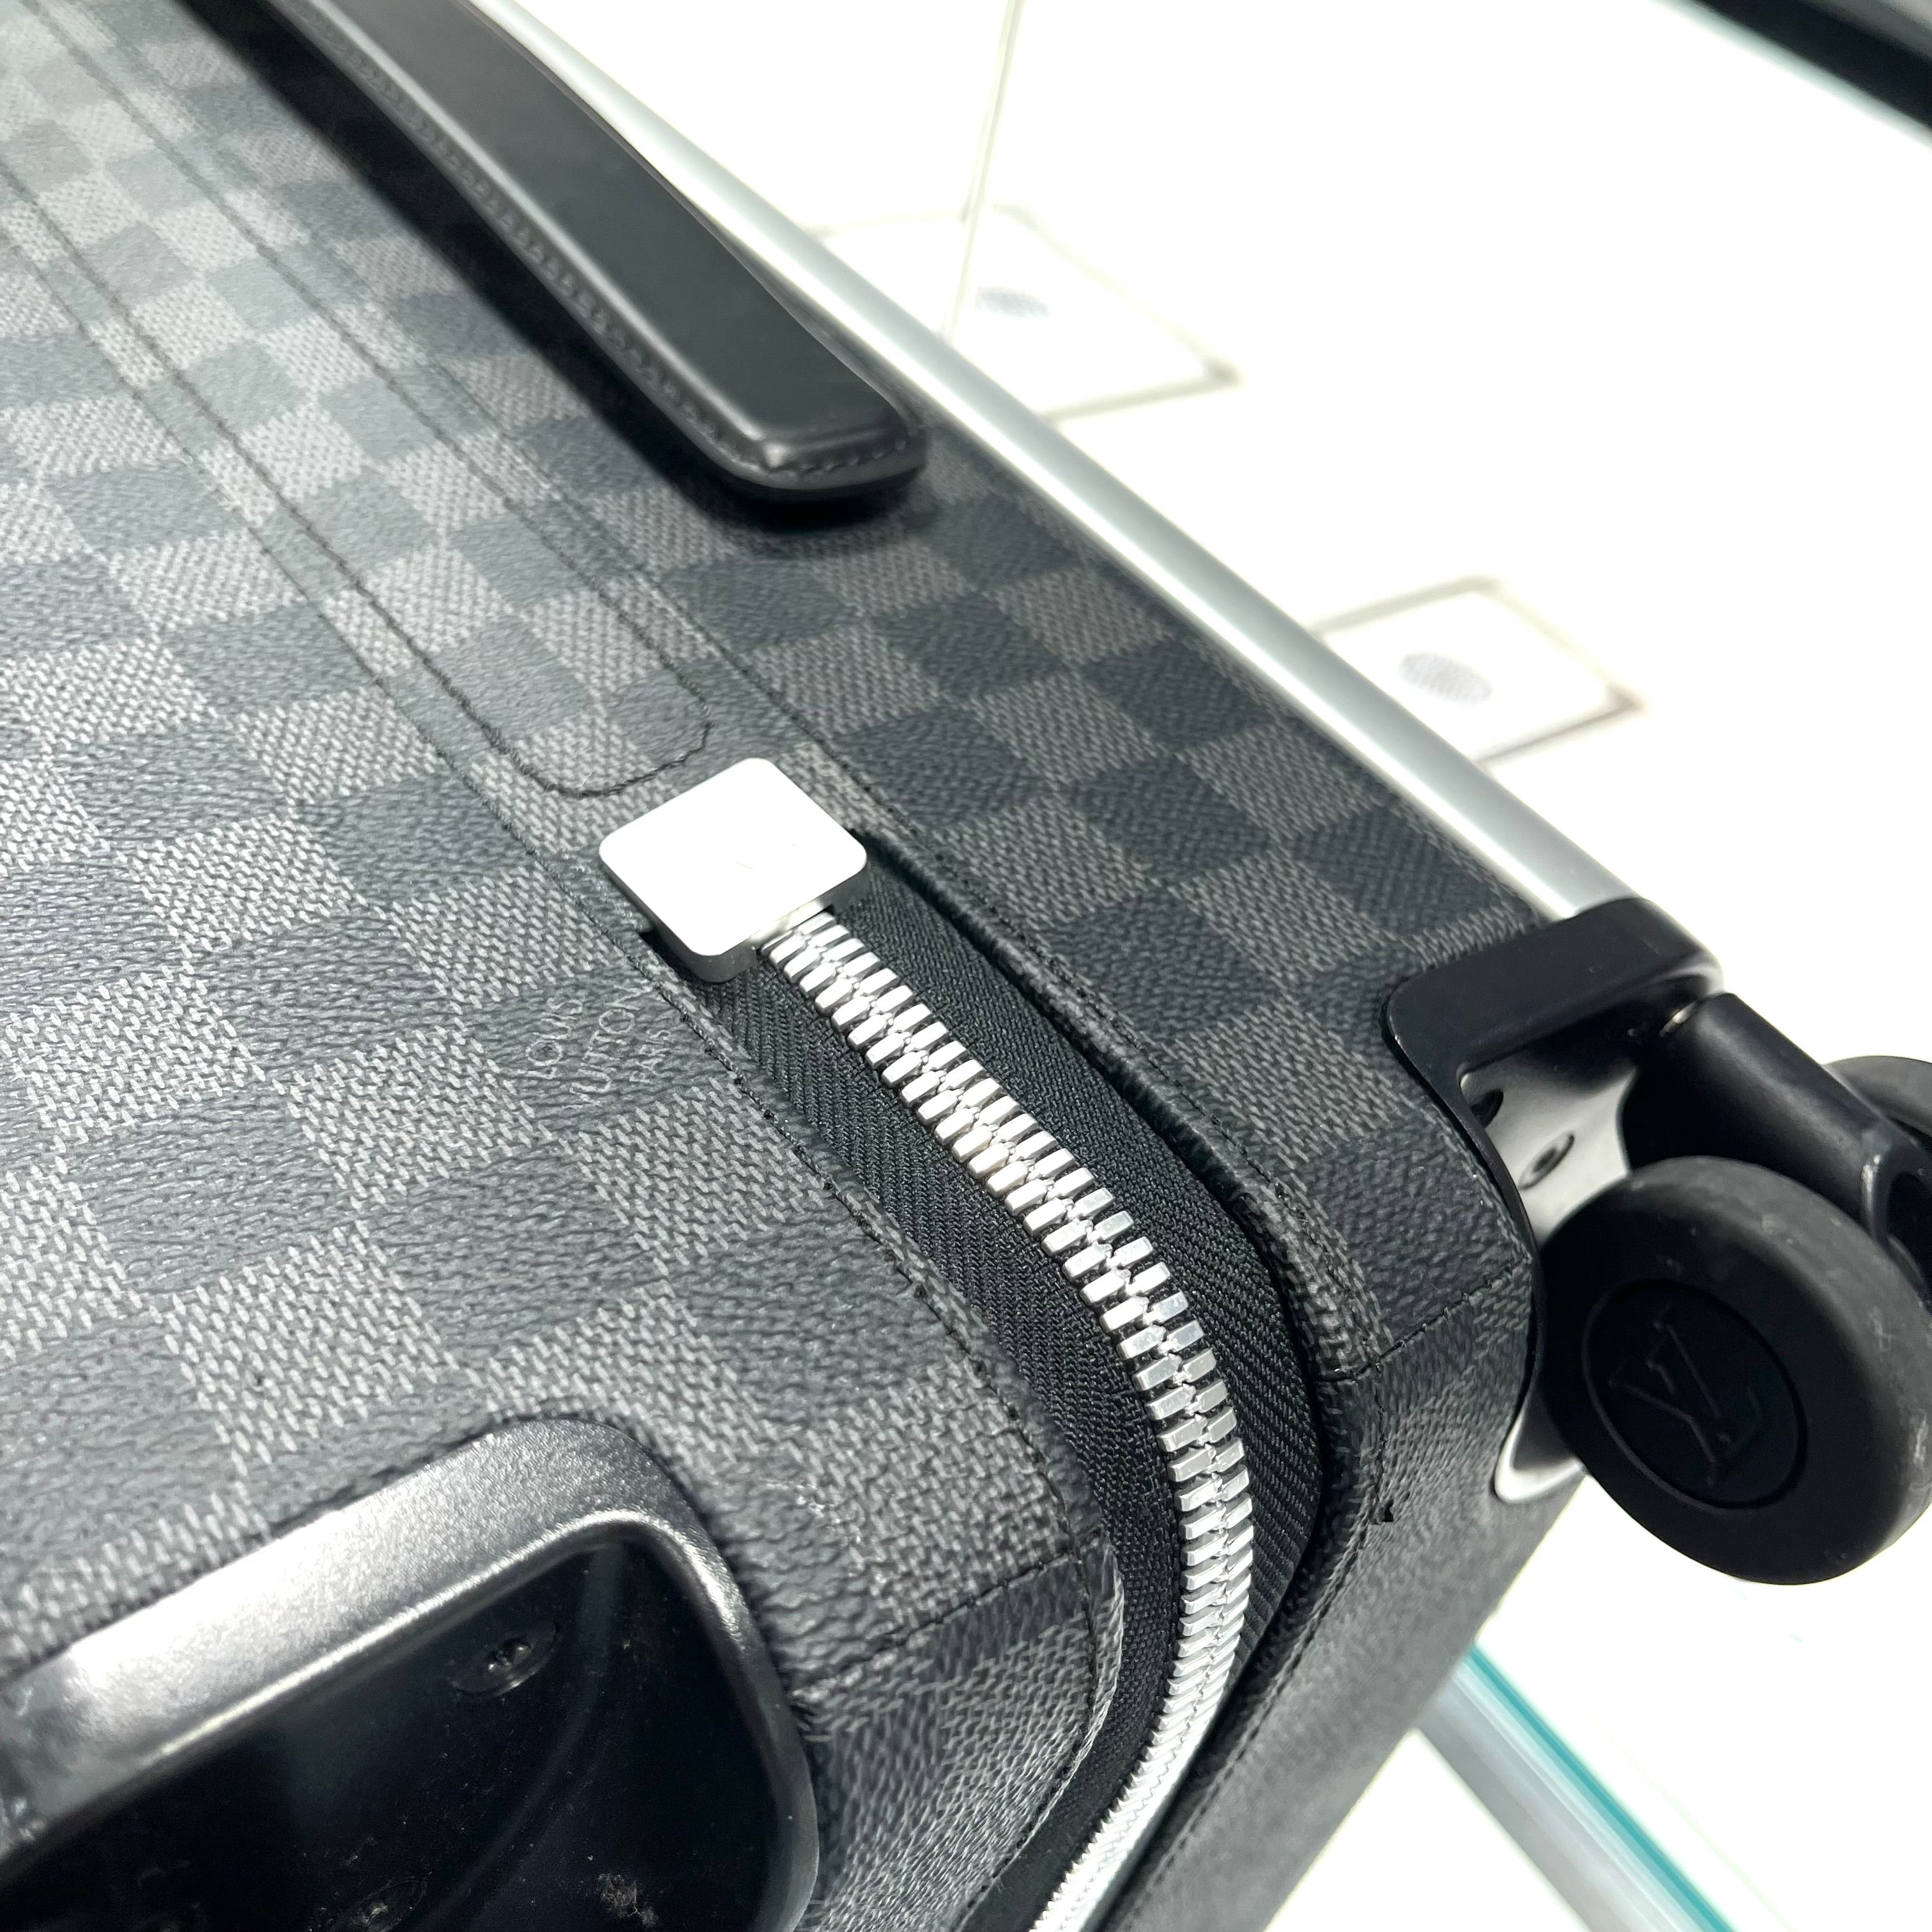 Louis Vuitton Damier Graphite Horizon 50 - Black Carry-Ons, Luggage -  LOU796137